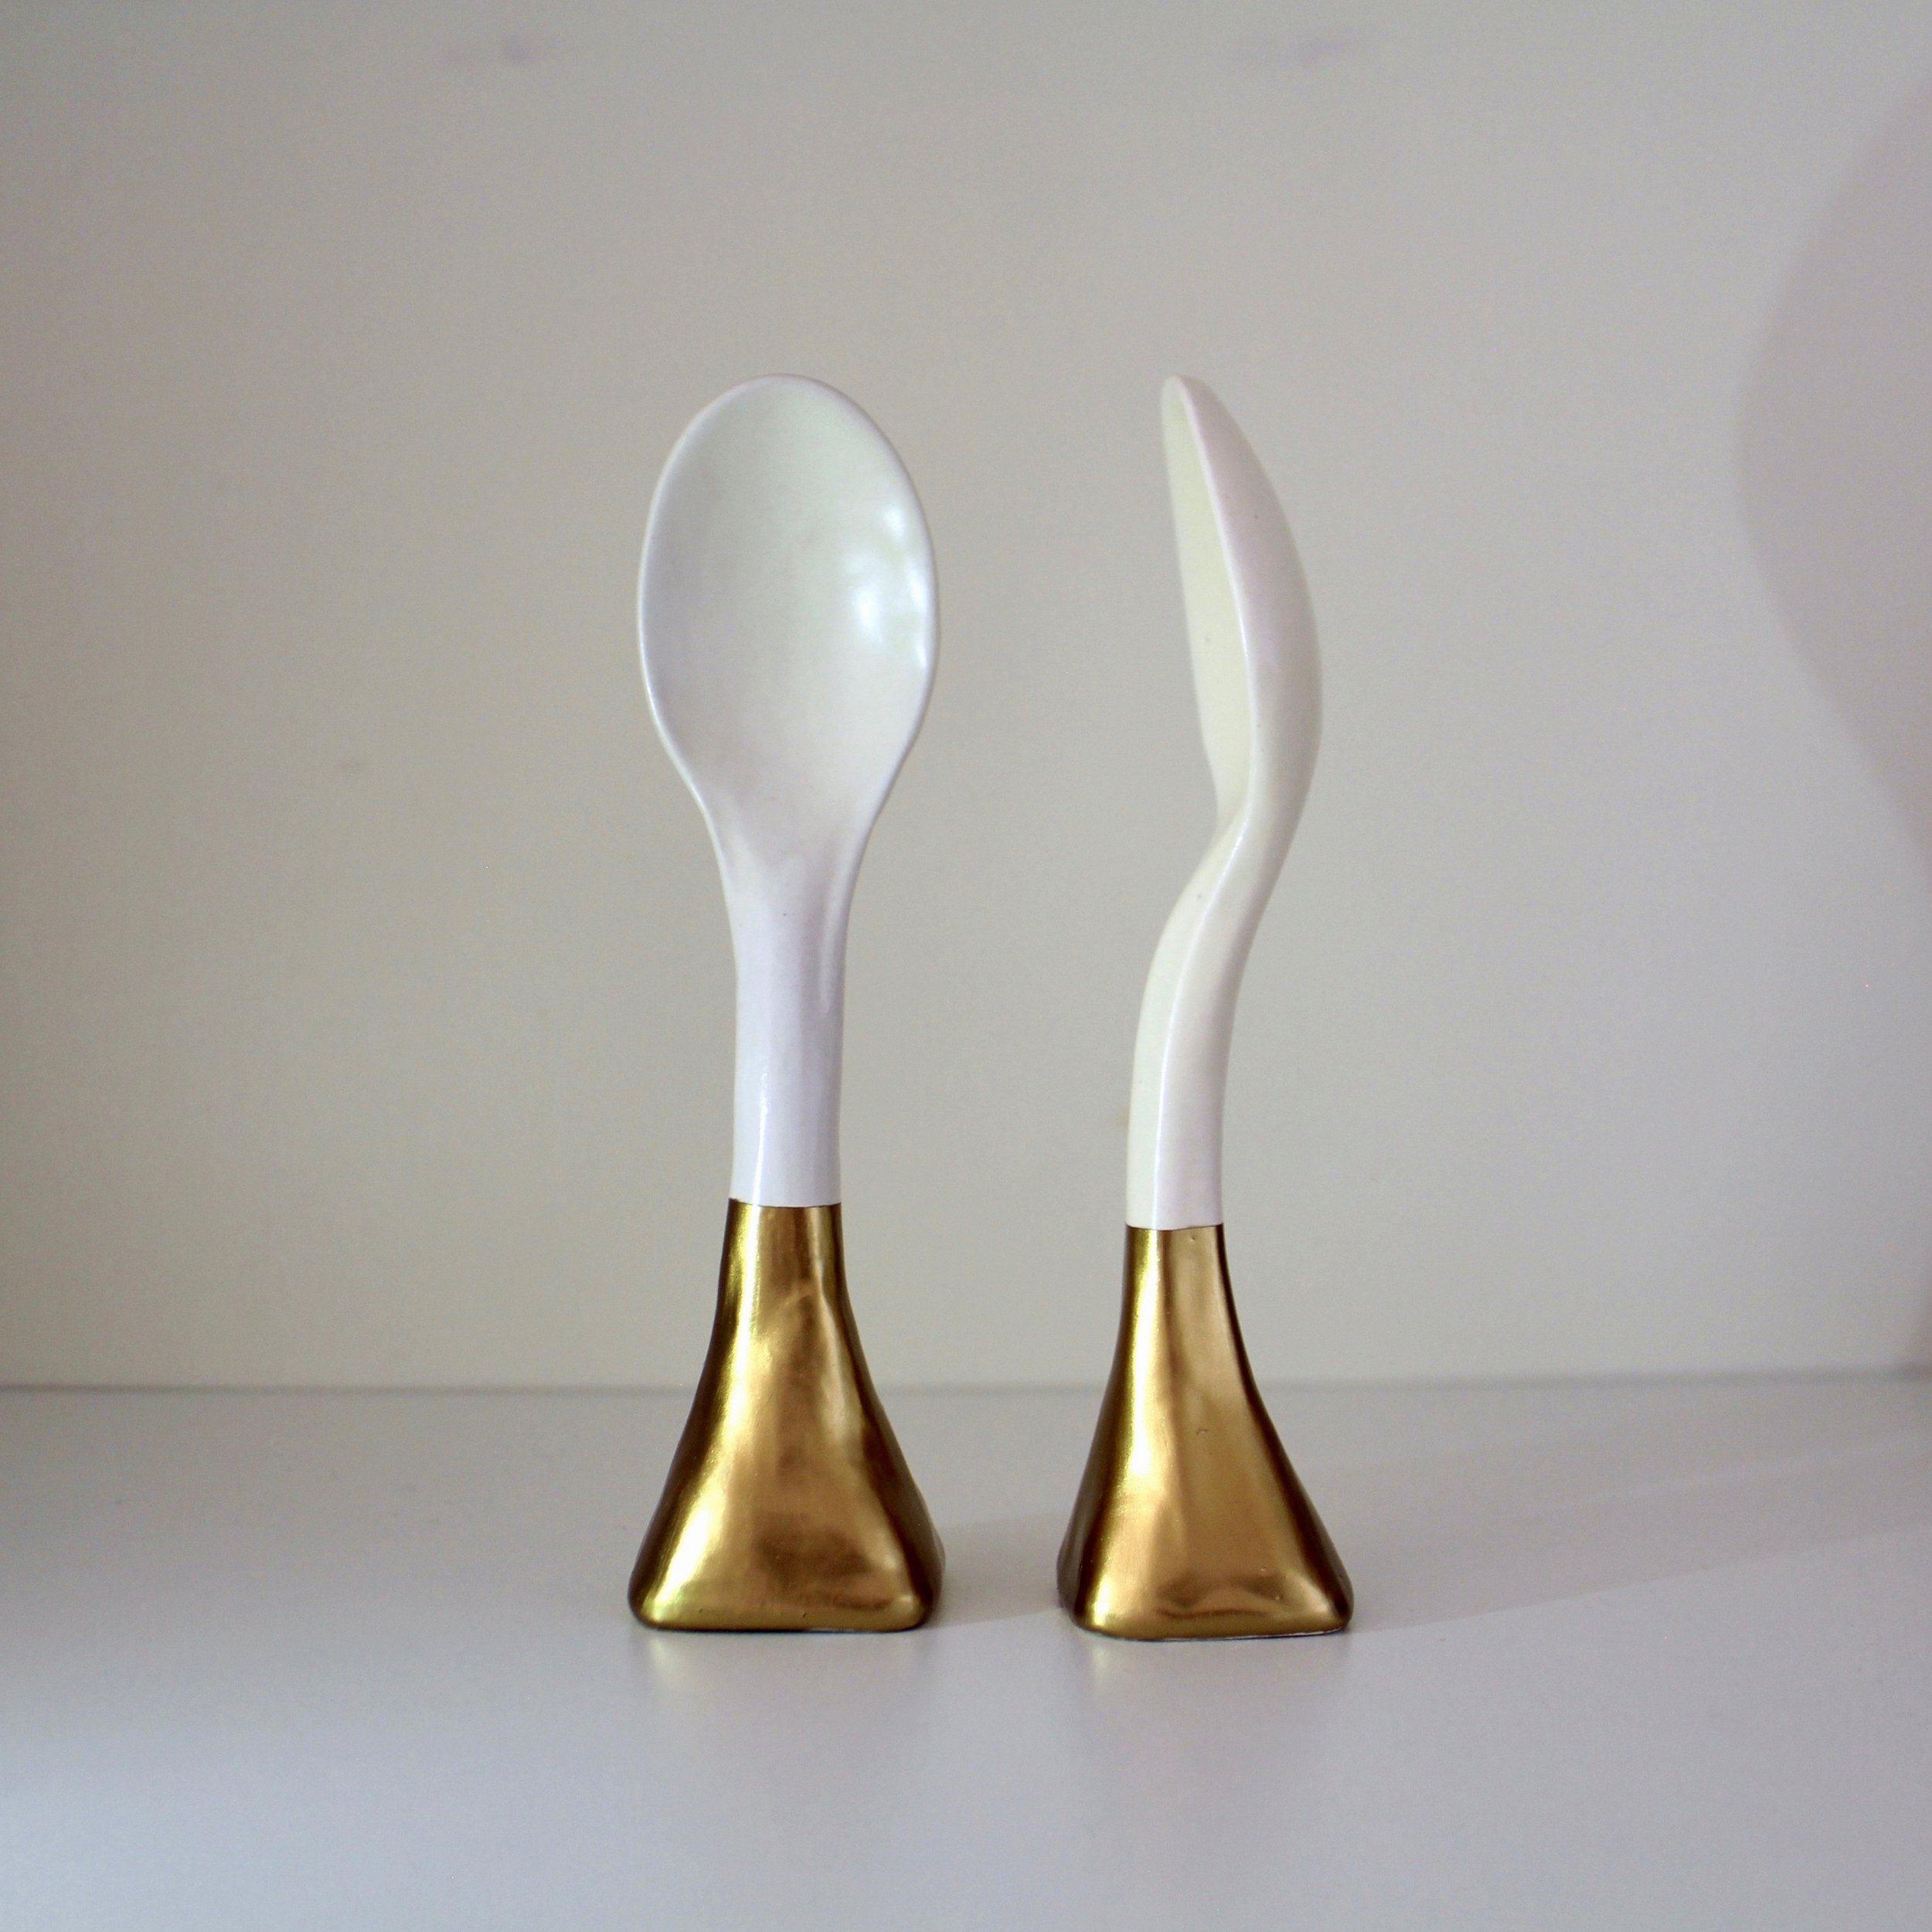 upright spoon_gold.jpg